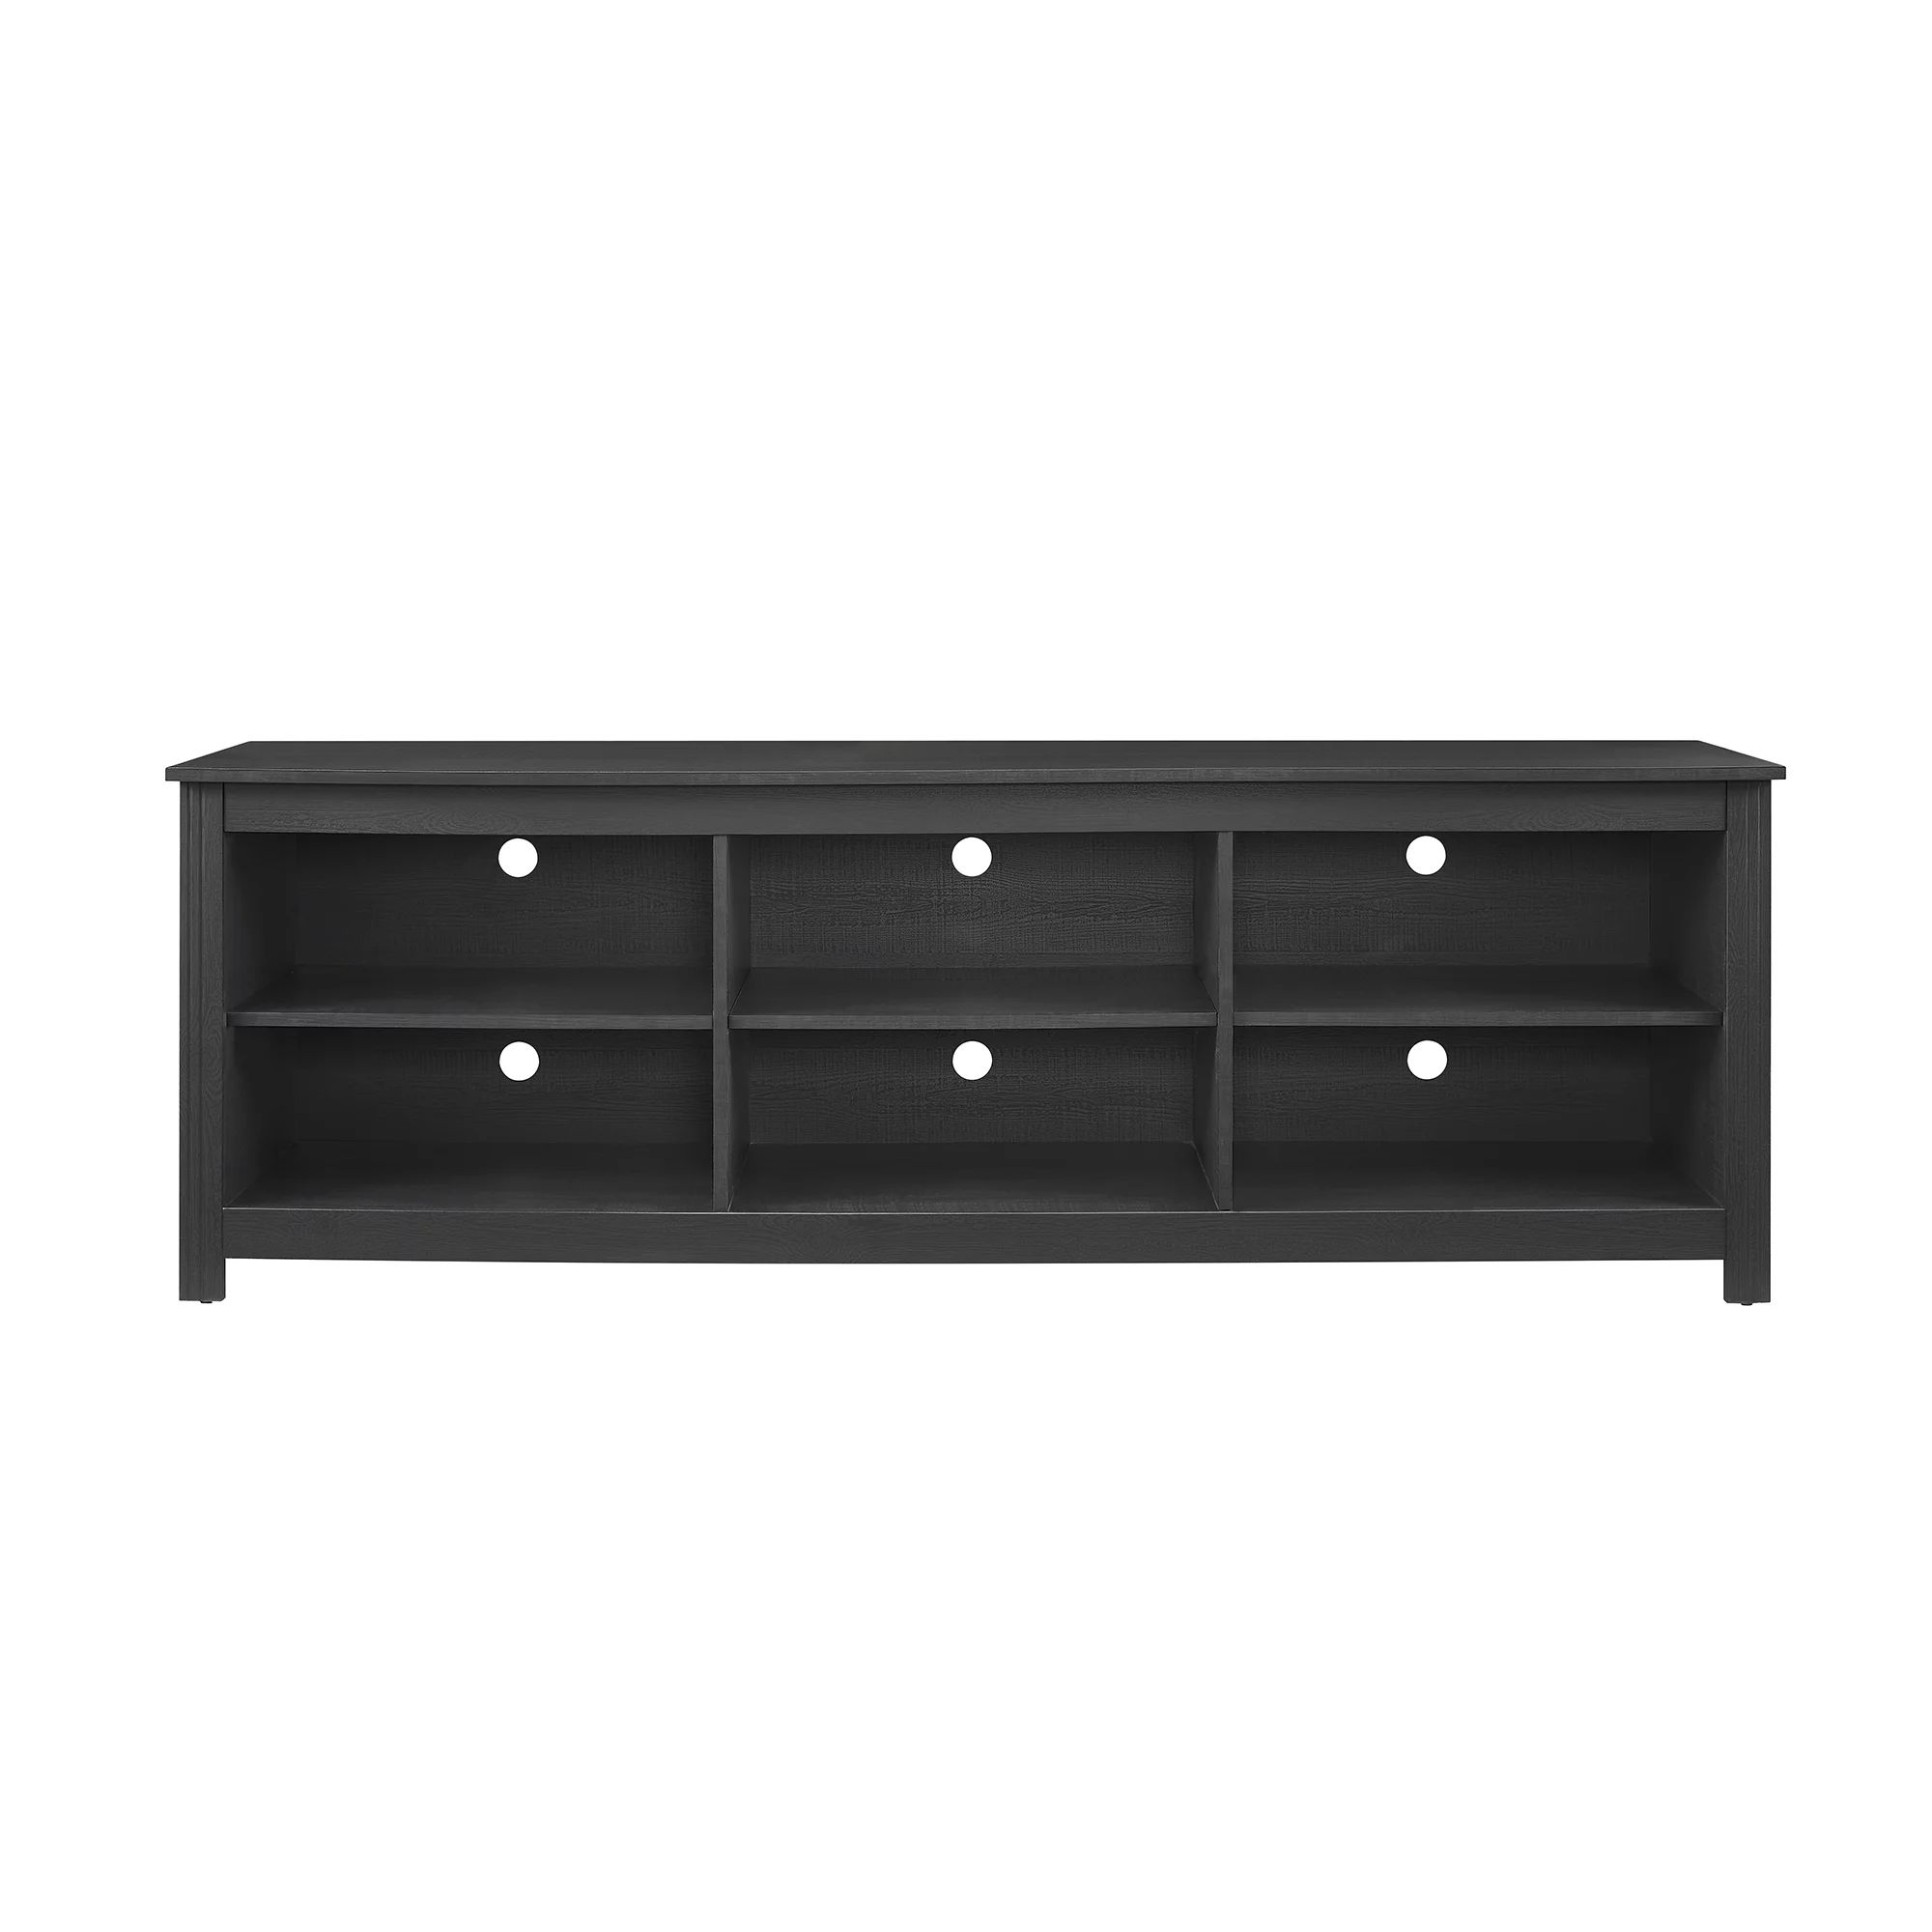 Mainstays Adjustable Shelf TV Stand for TVs up to 70", Black Finish | Walmart (US)